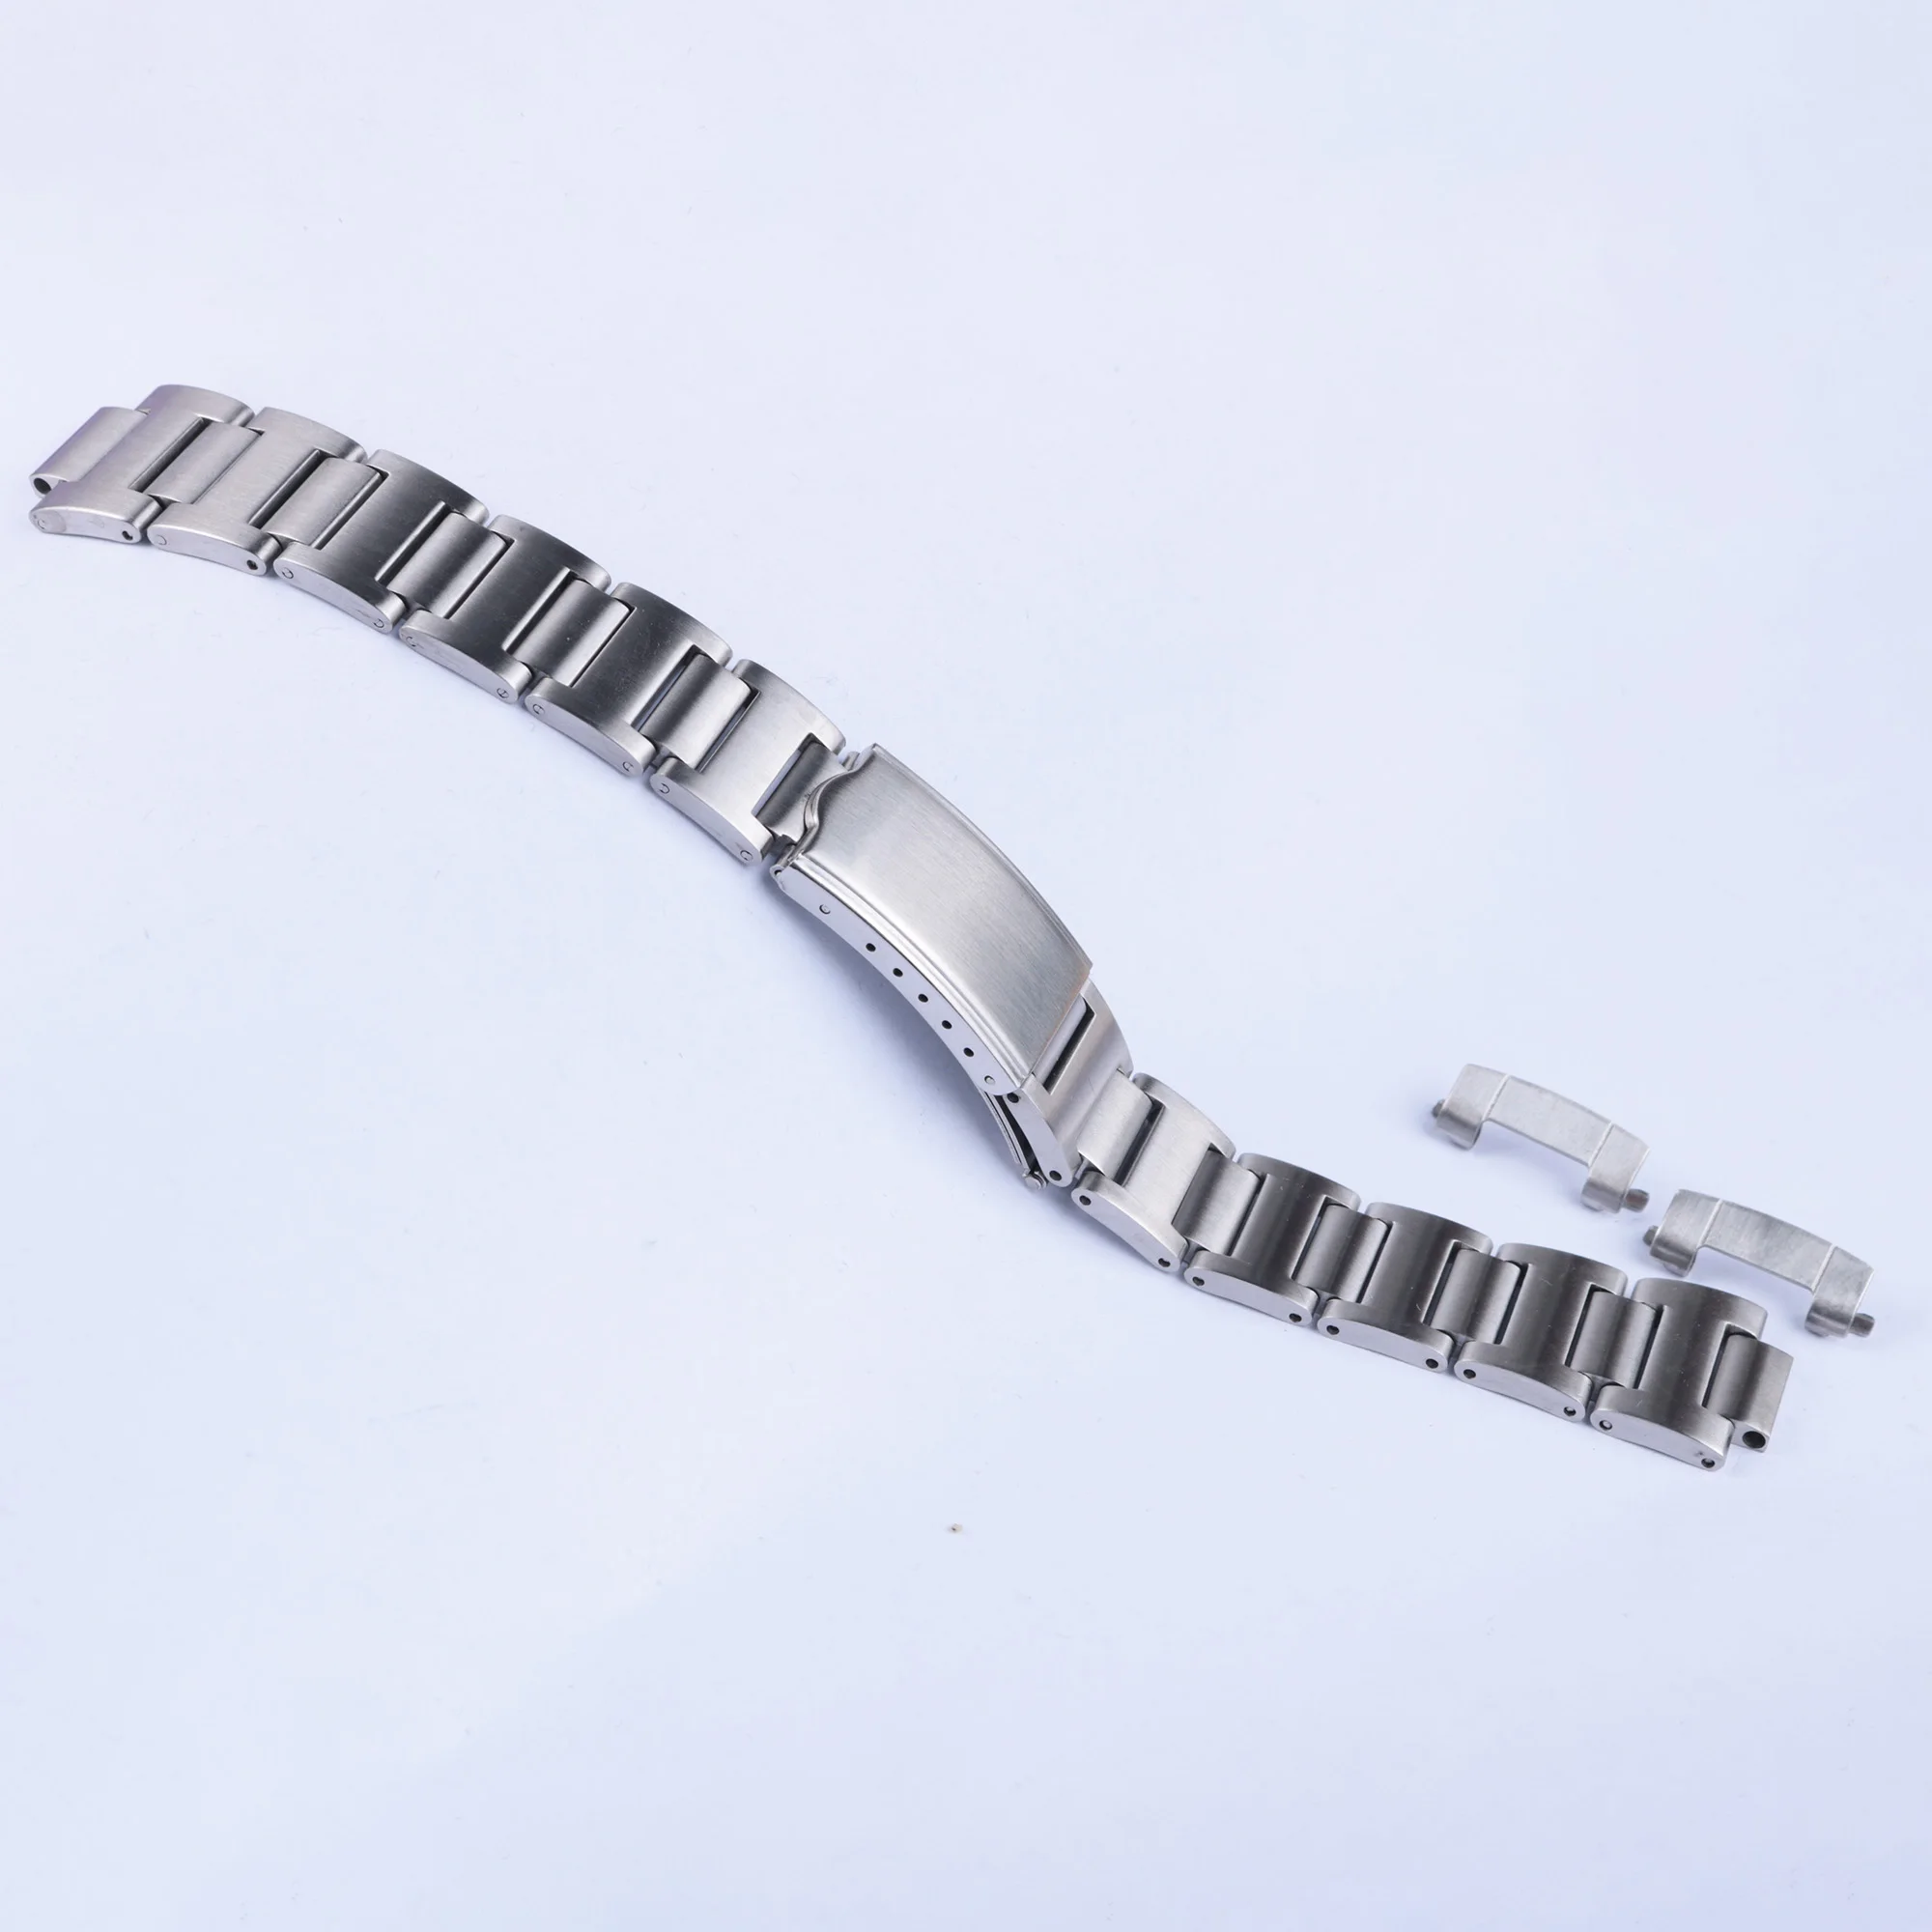 19mm vintage 316L hohl gebogene ende armband band armband für seiko uhr 6139-6002 6000 6001 6005 6032 chrono